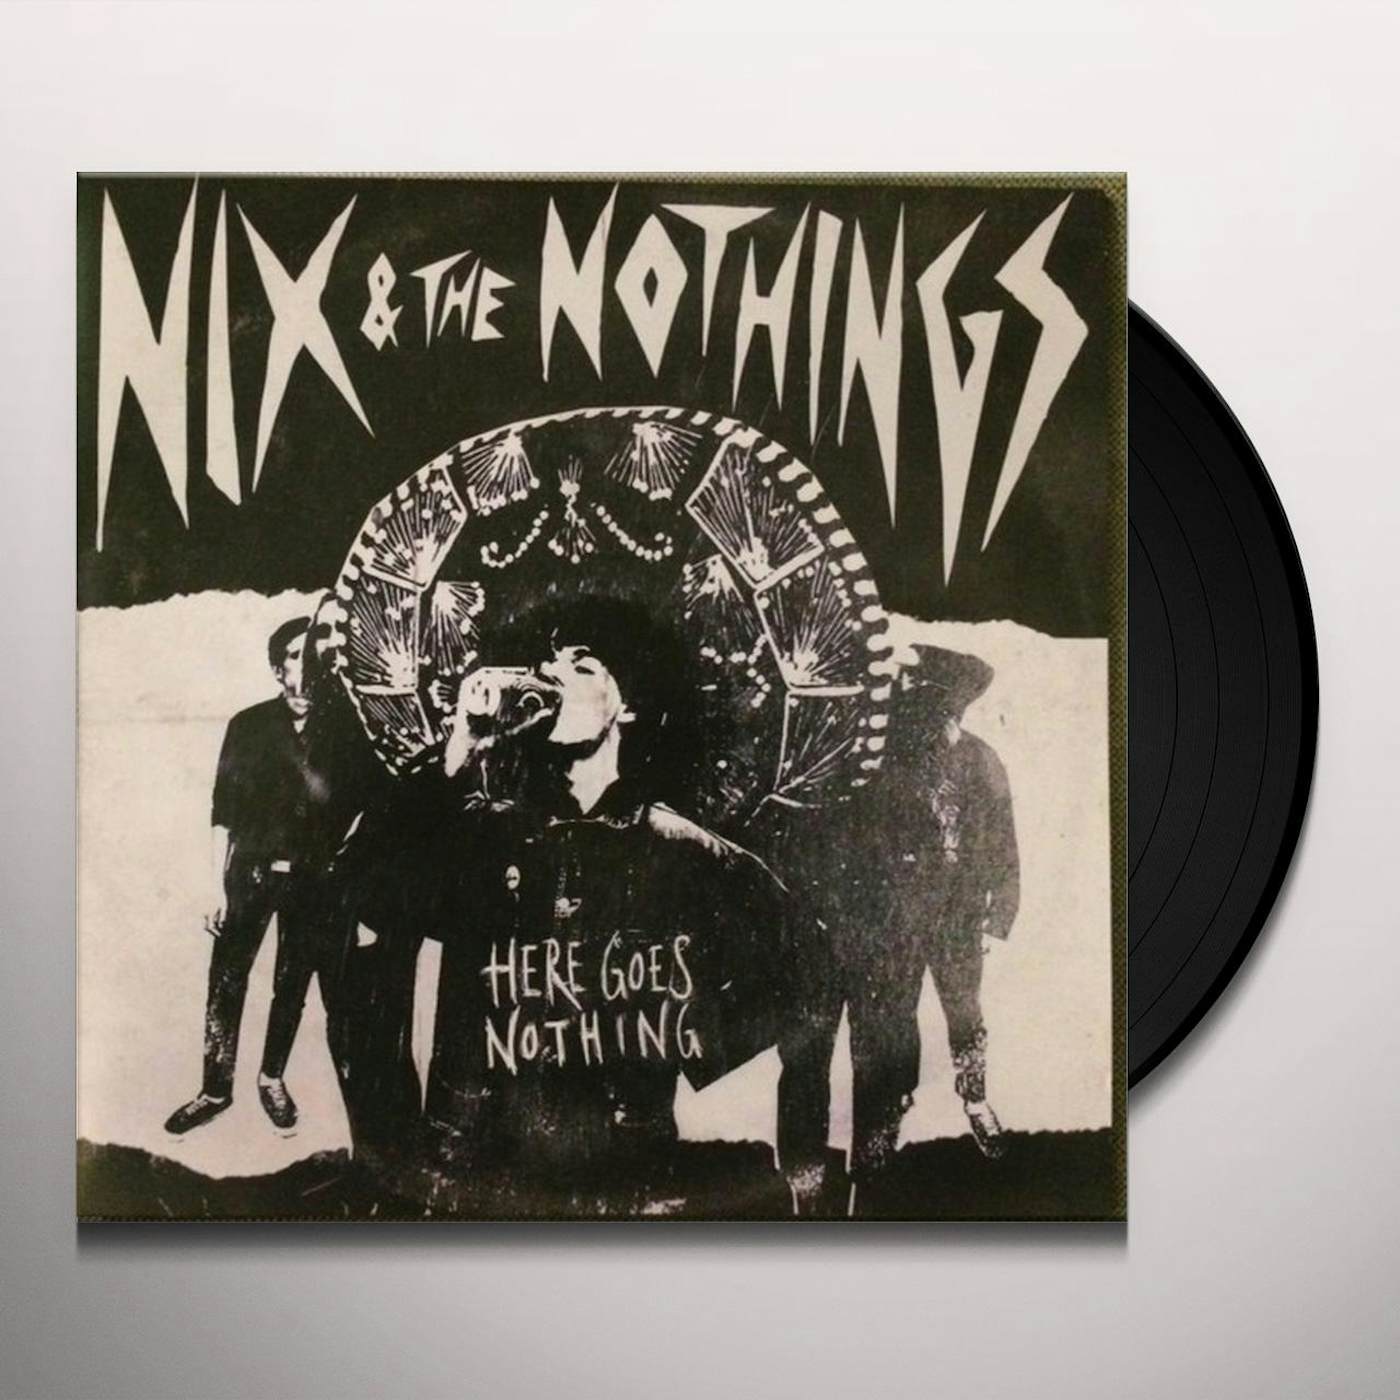 Here Goes Nothing  Nix & the Nothings